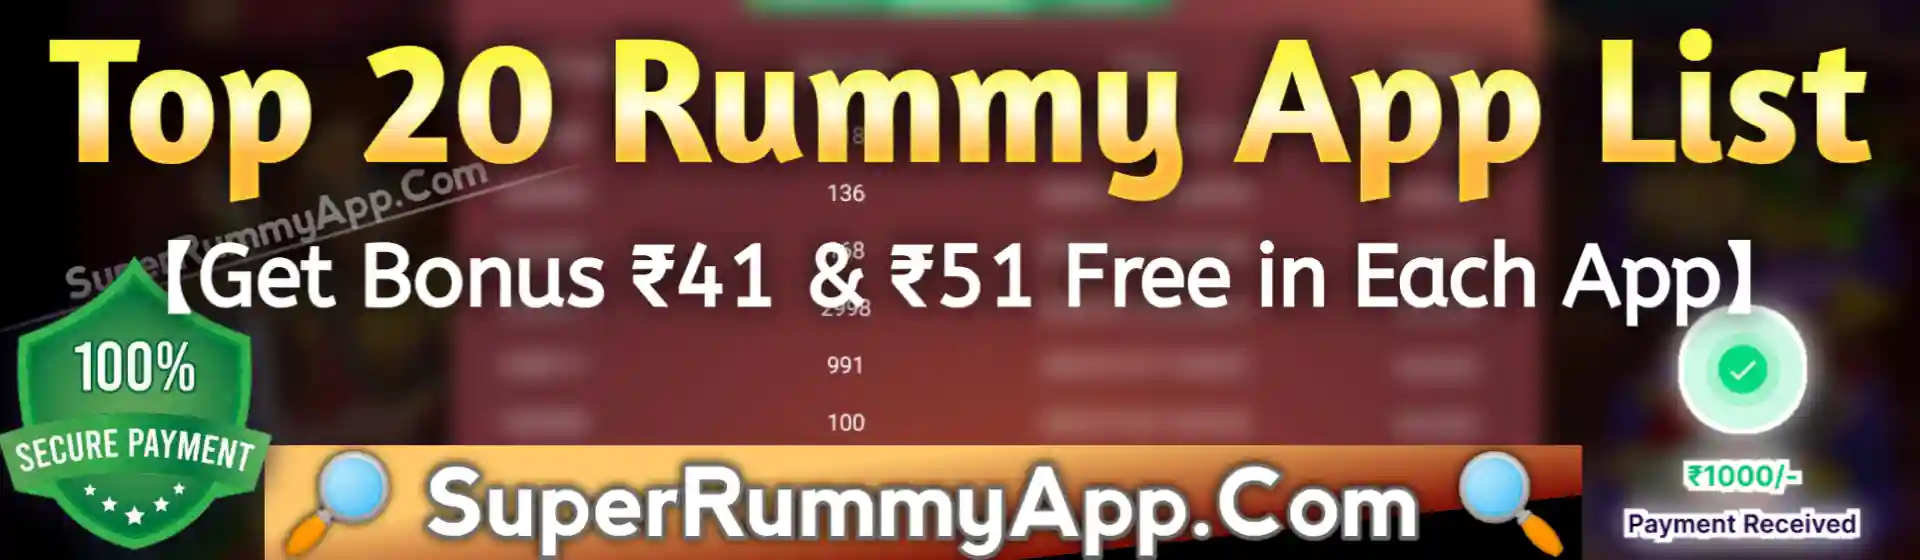 Top 20 Rummy App List ₹41 and ₹51 Bonus